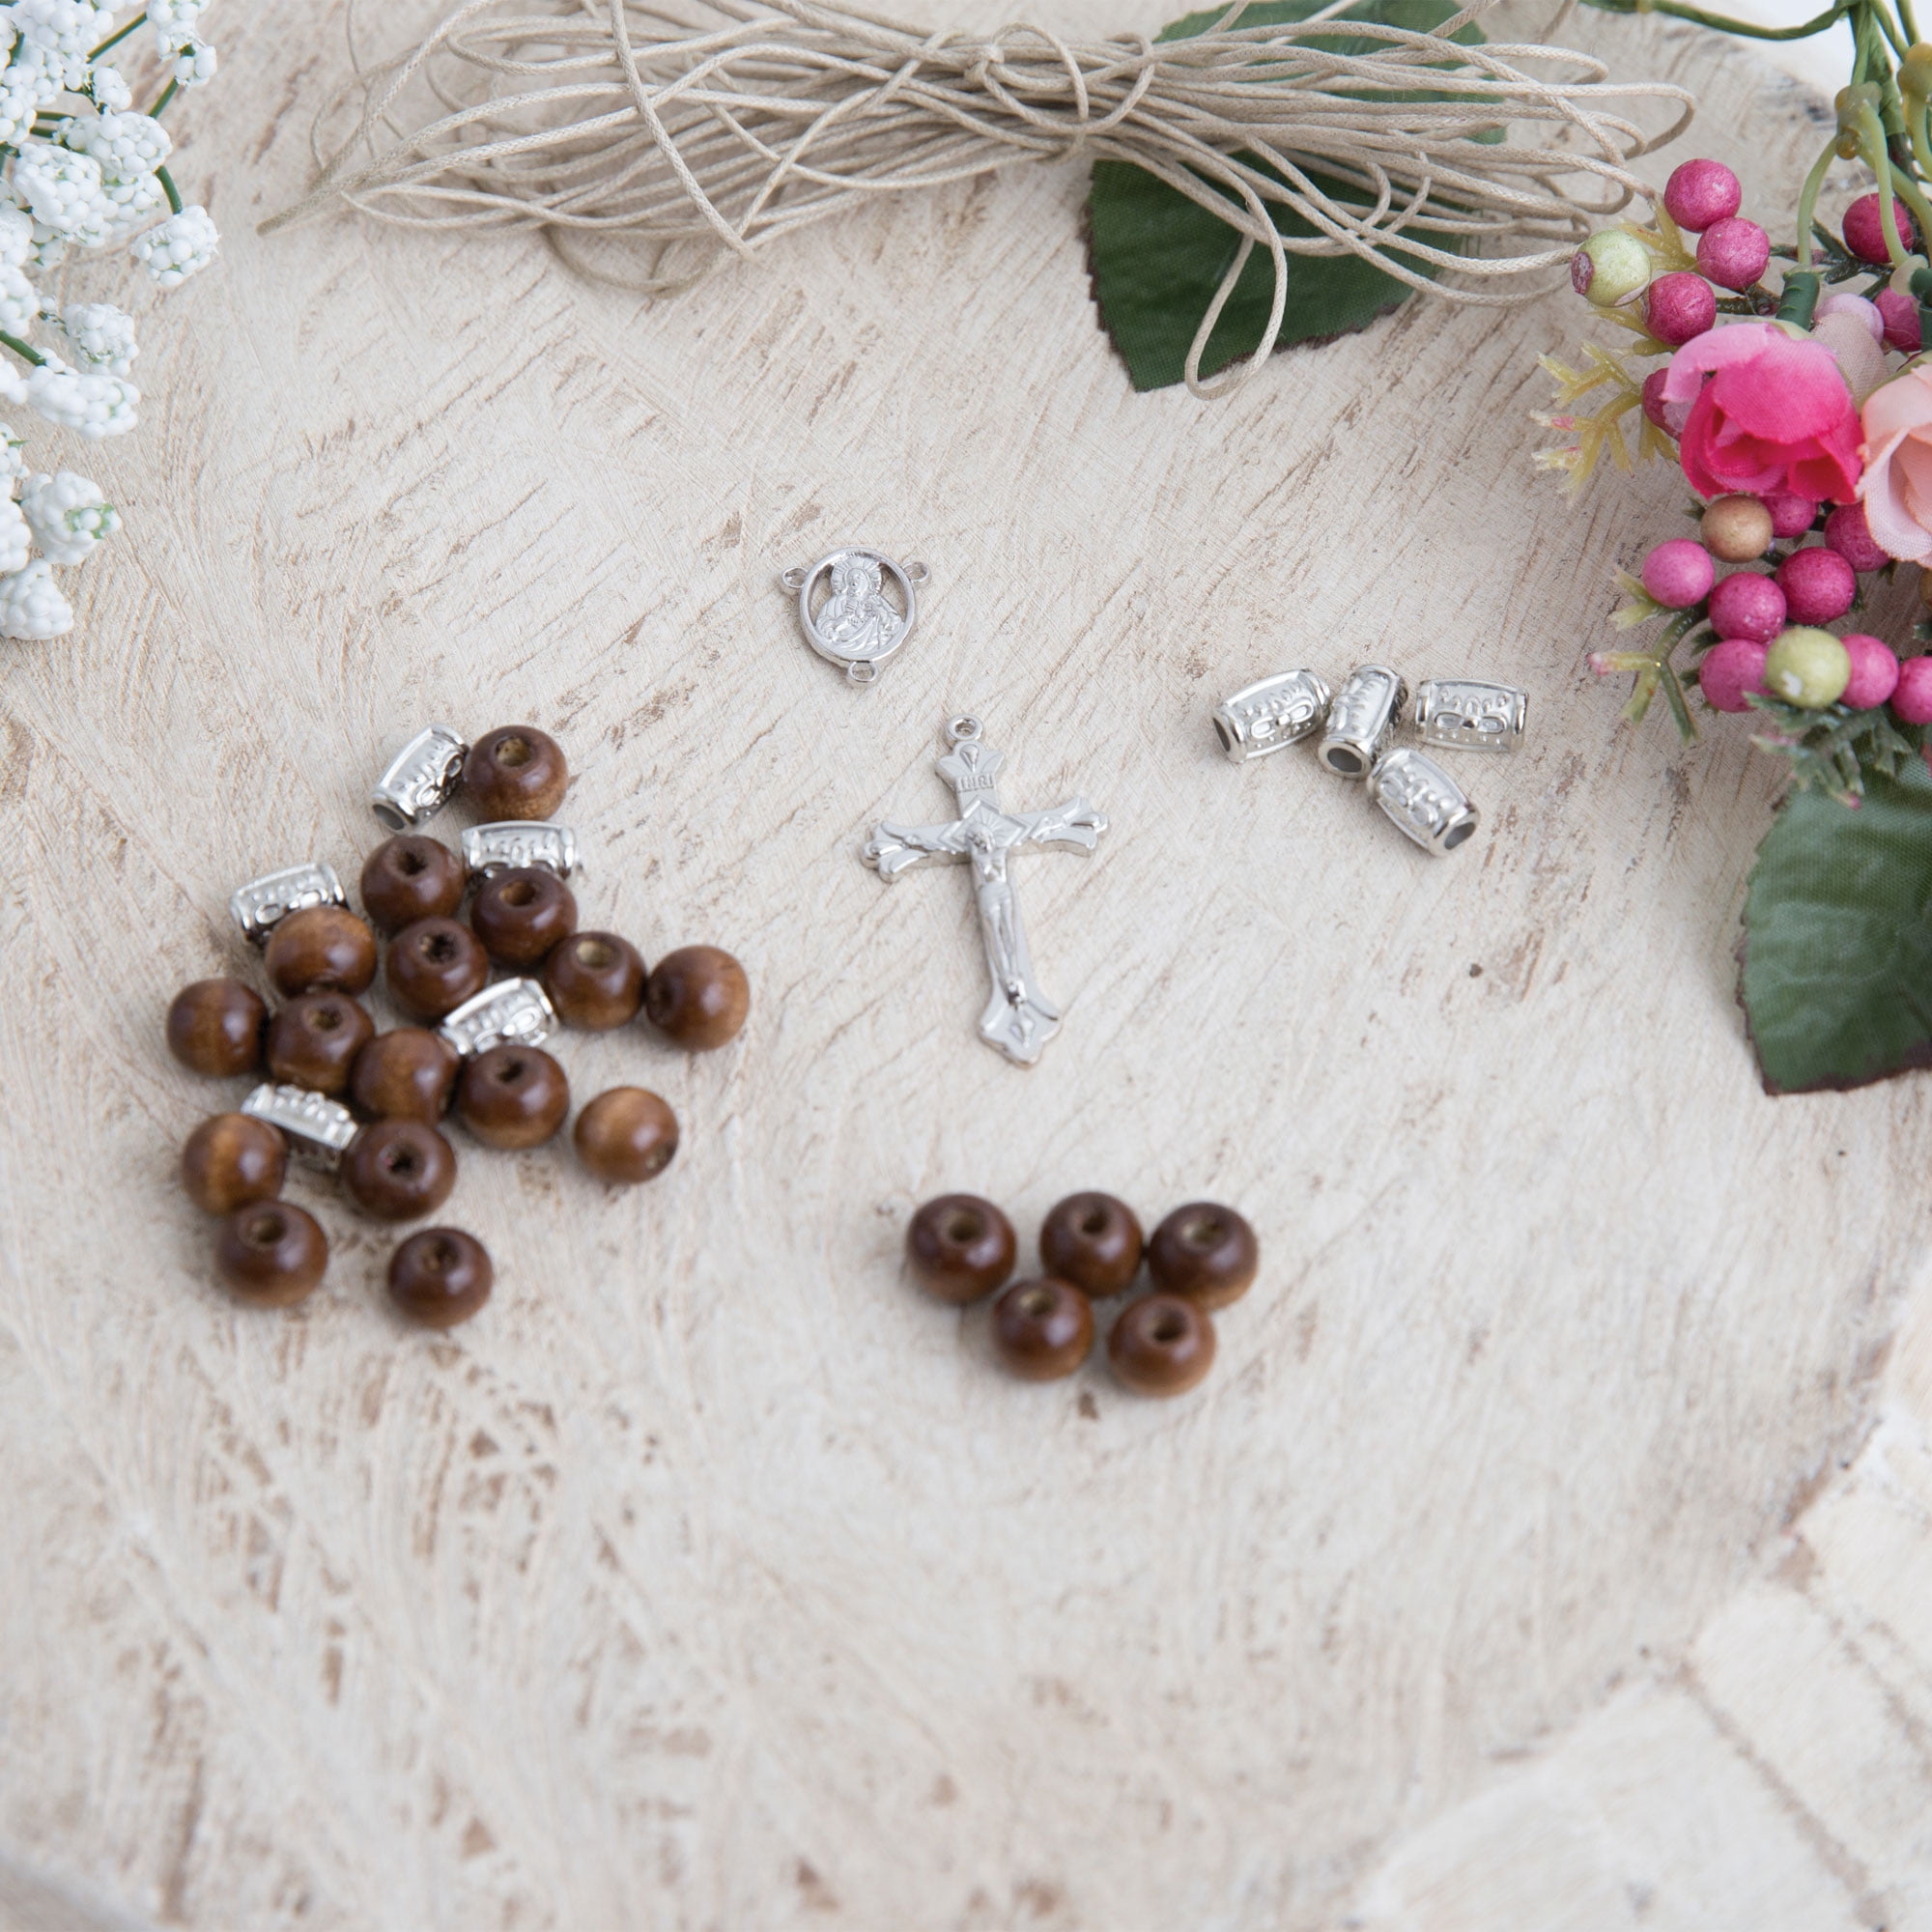 SUNNYCLUE Rosary Making Kit Pearl Bead Rosary Necklace DIY Kit - 2